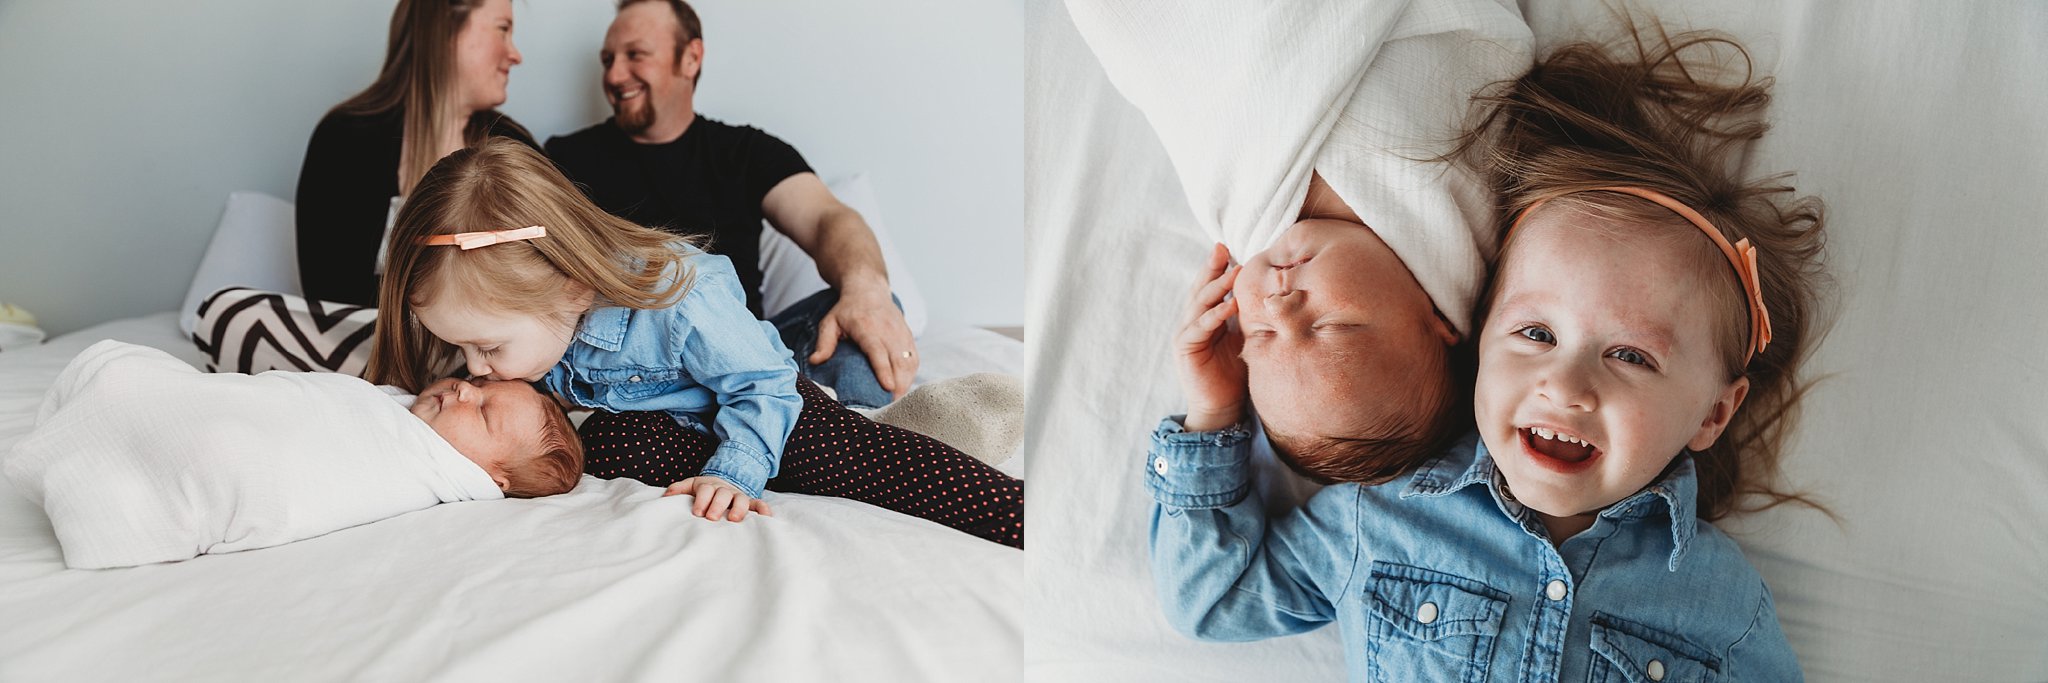 Jennifer Blaak Photography, Hamilton Lifestyle Newborn Photographer, Hamilton In-Home Lifestyle Session, Sisters snuggling on bed